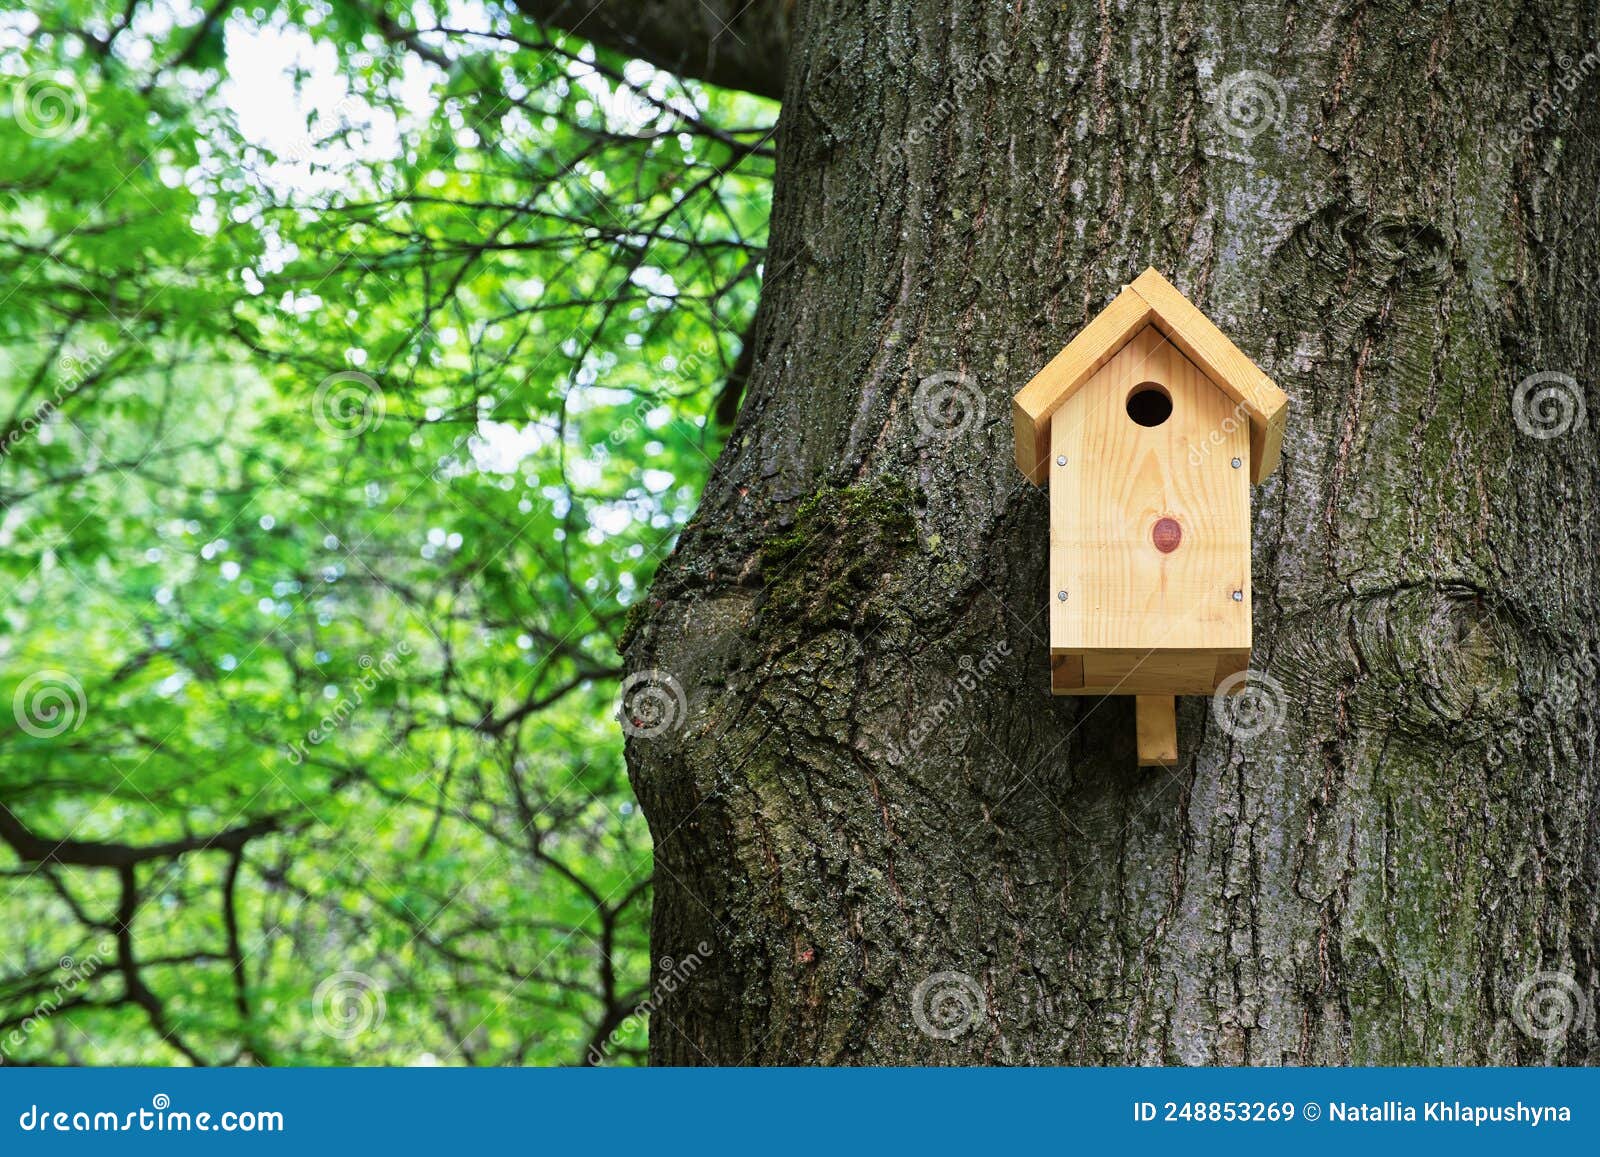 bird house on a tree. wooden birdhouse, nesting box for songbirds